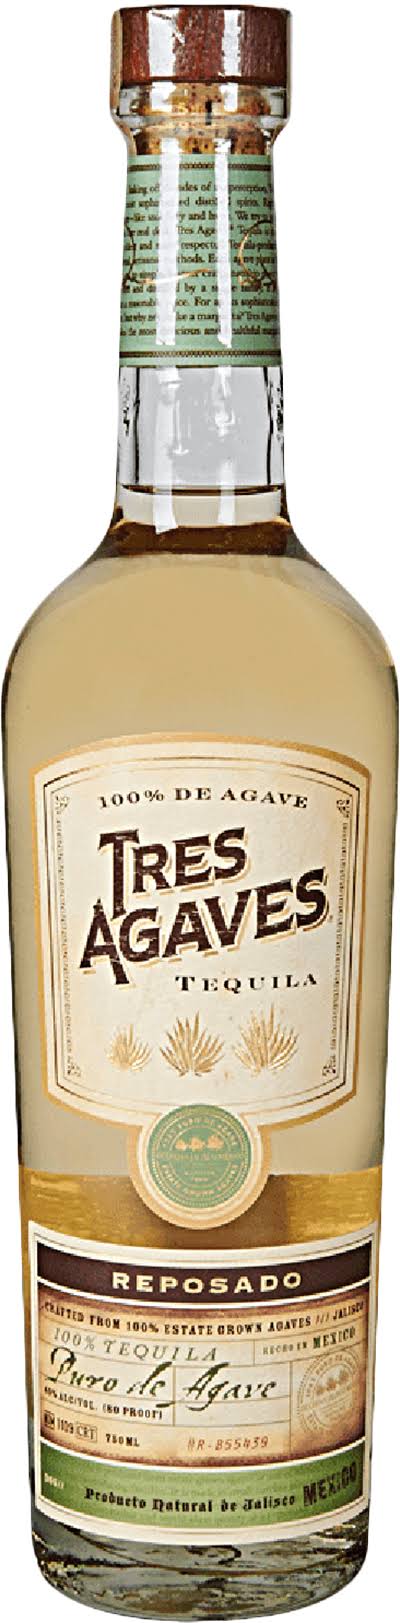 Tres Agaves Reposado Tequila - Mexico